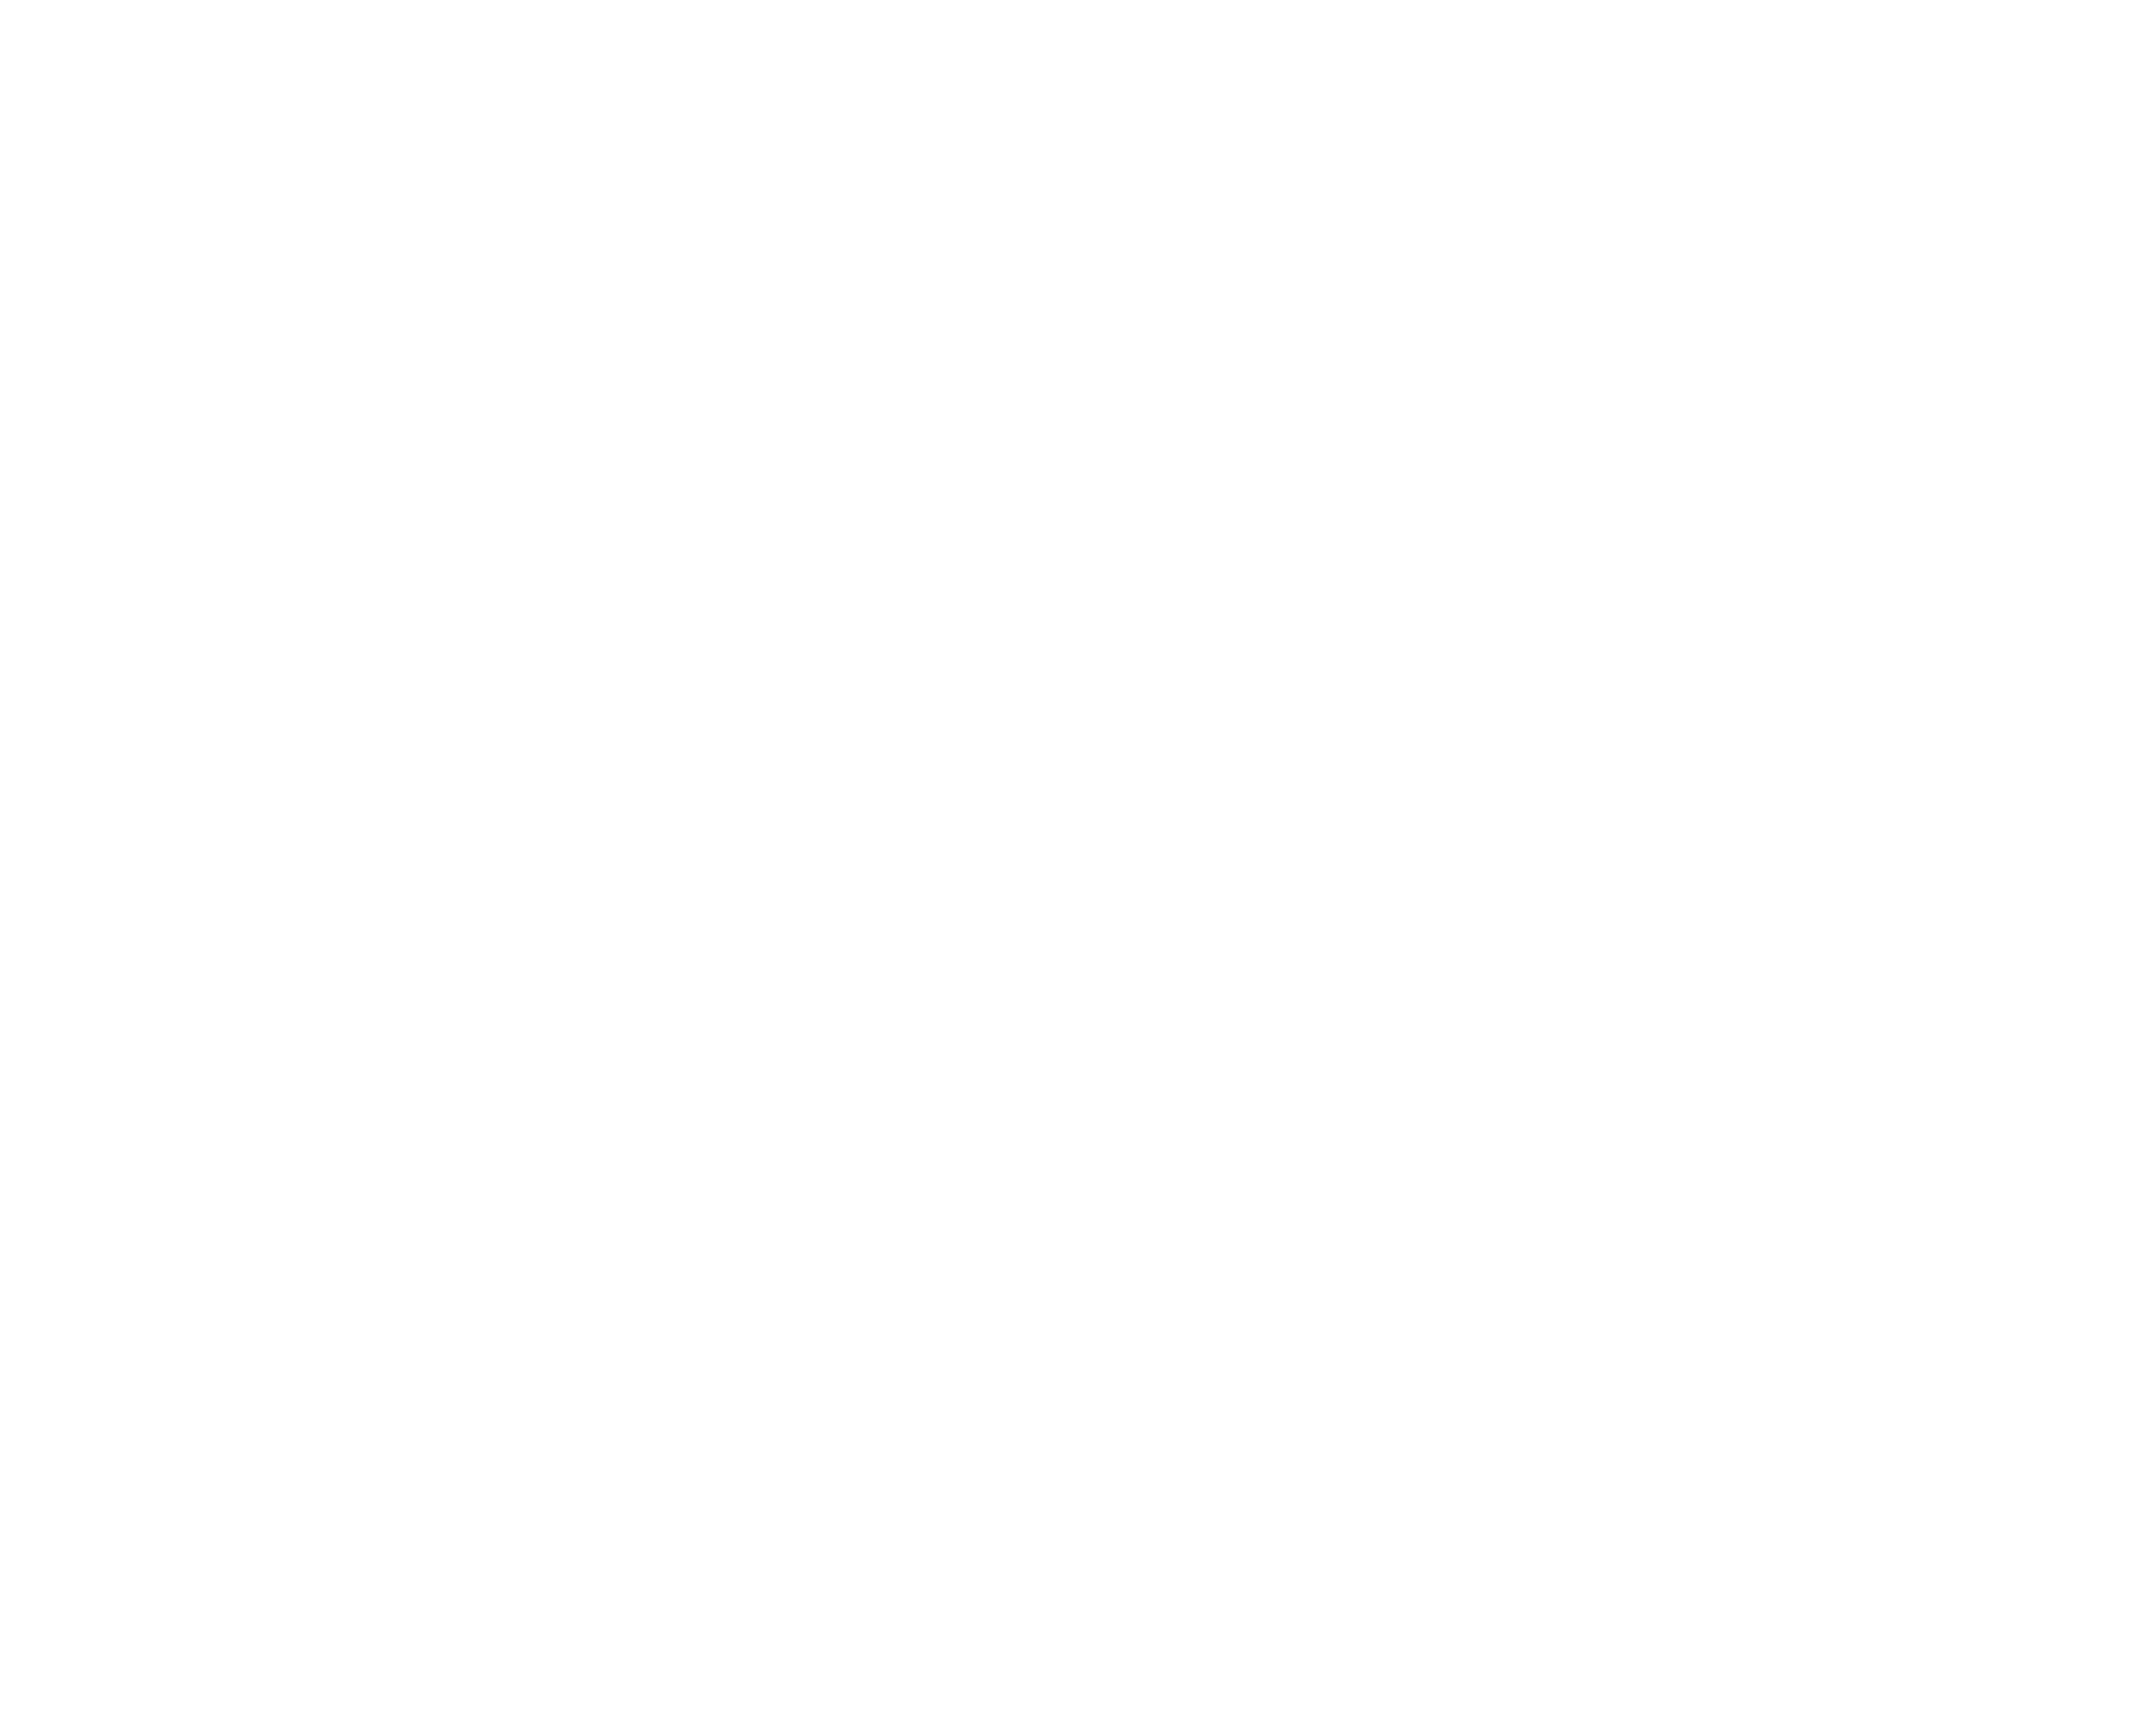 UBC Music Initiative